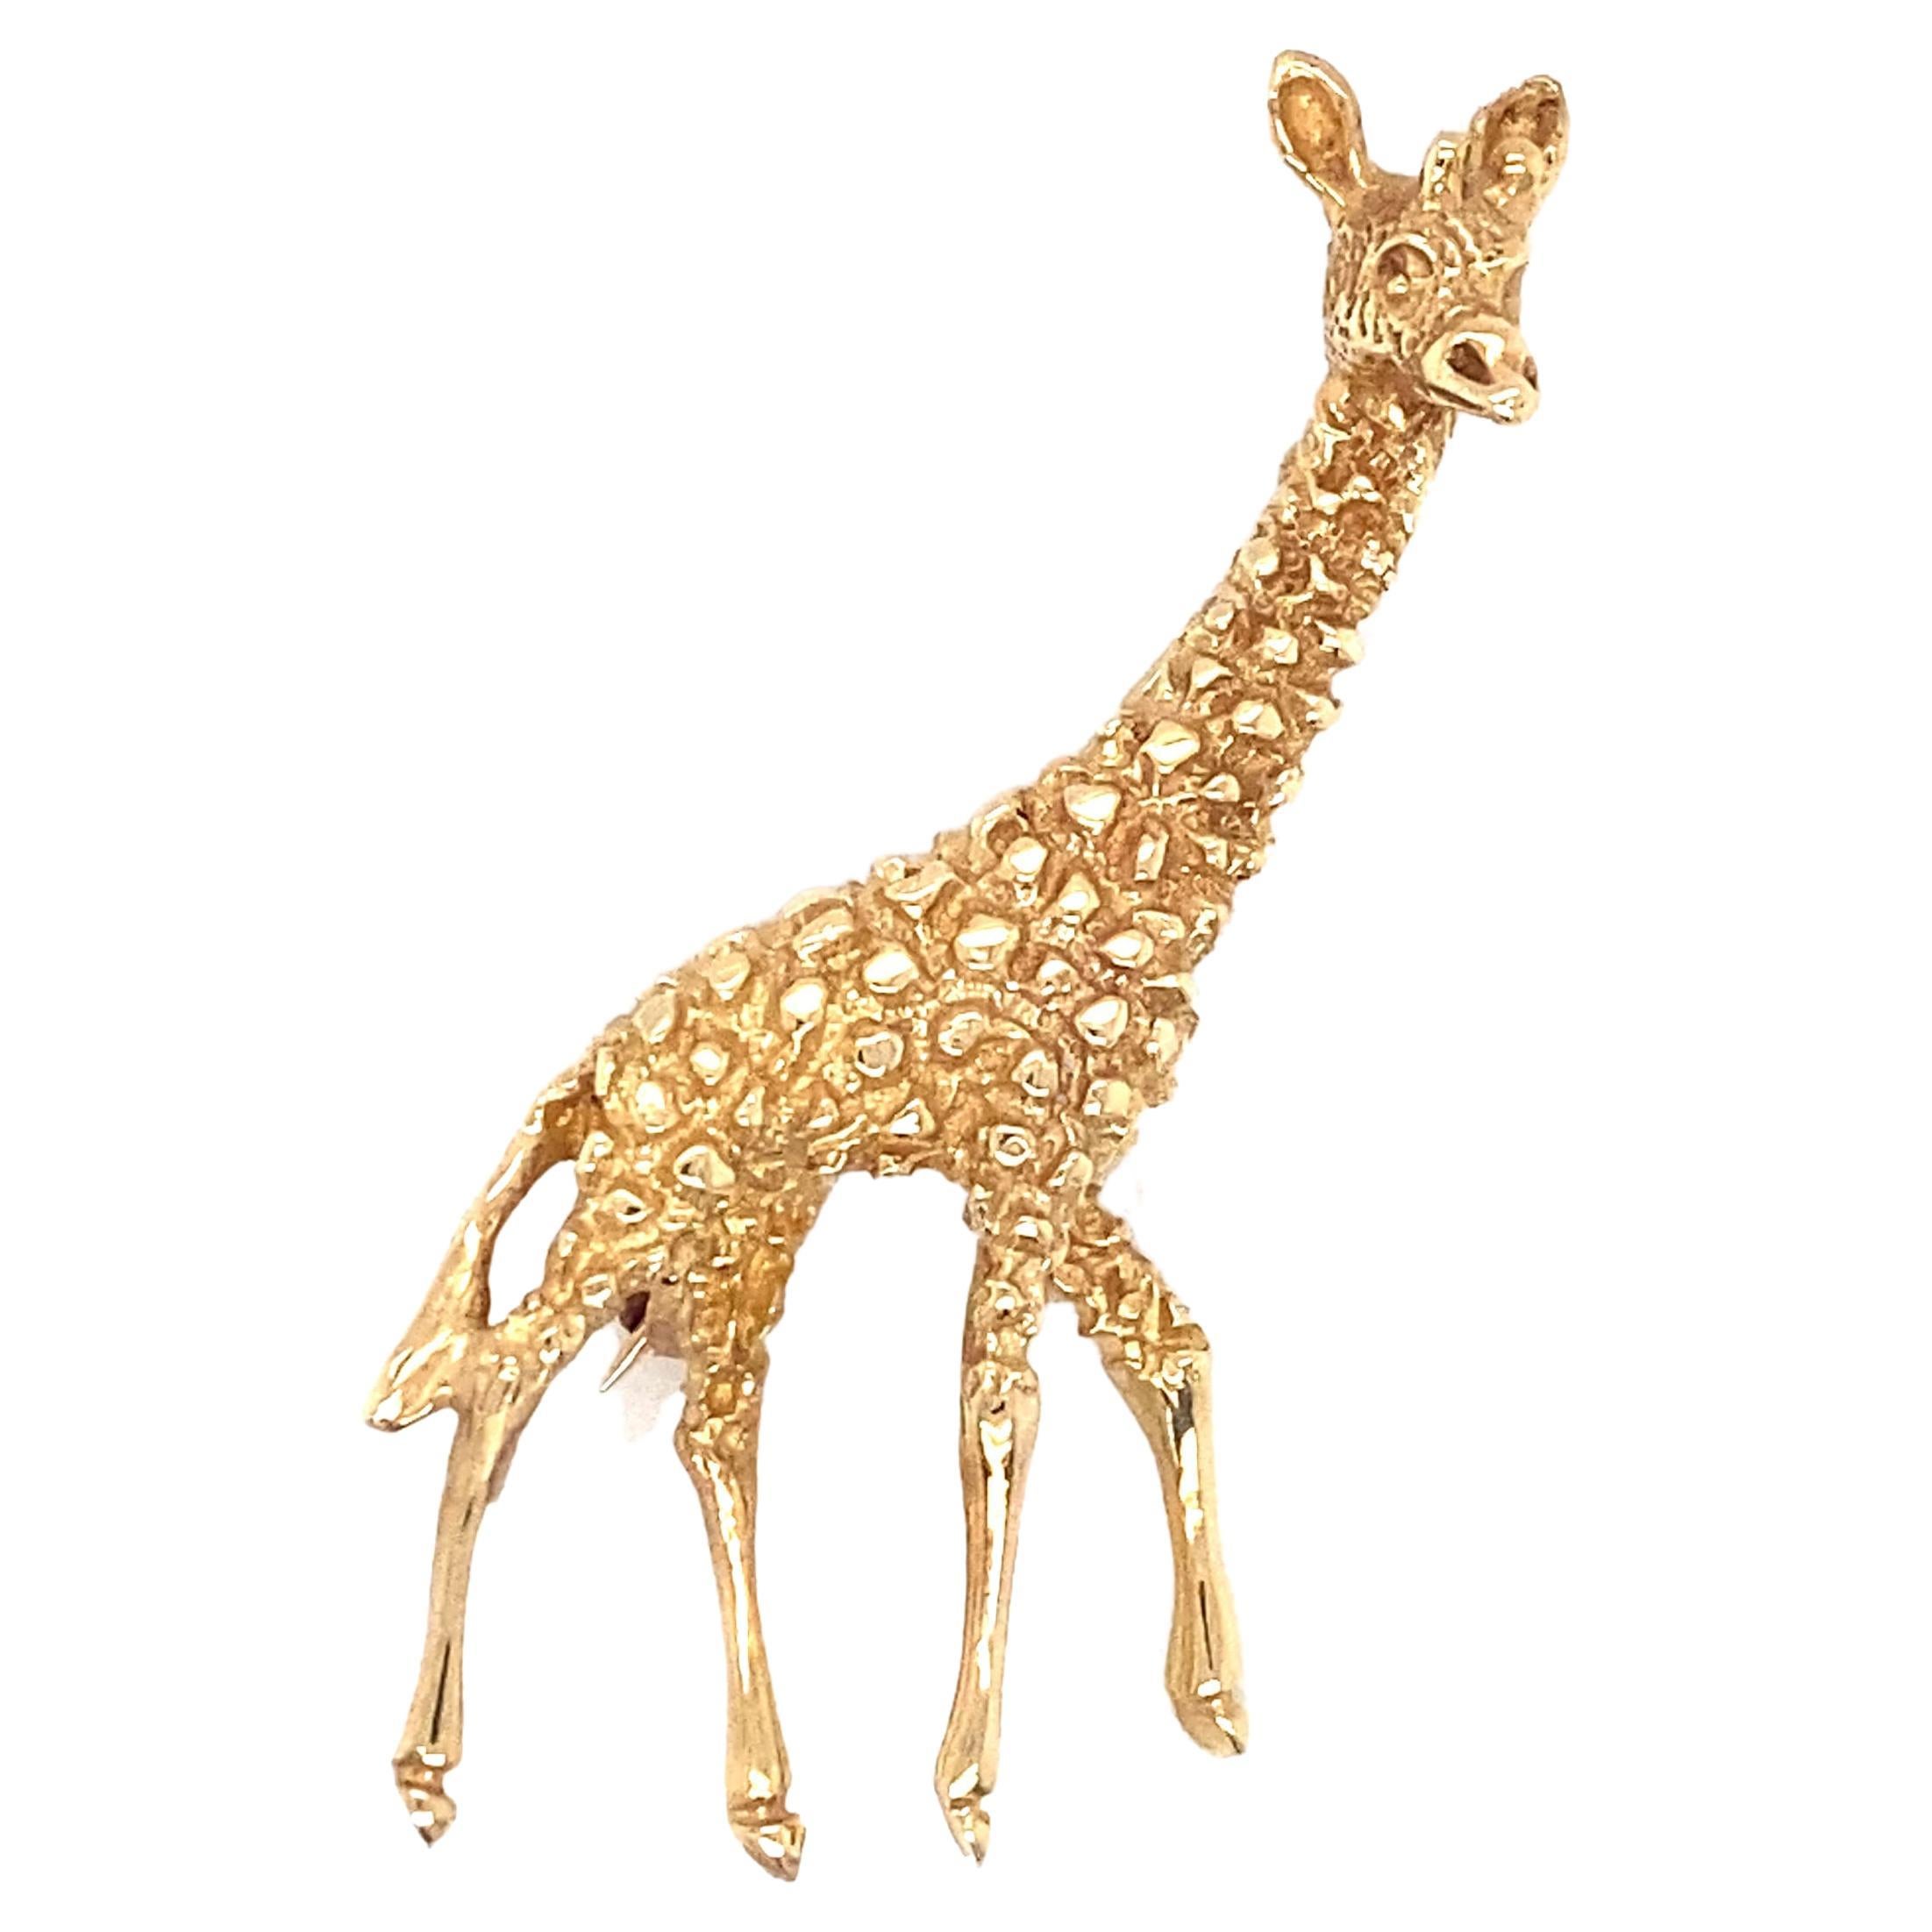 Circa 1950s Retro Giraffe Brooch in 14 Karat Gold For Sale